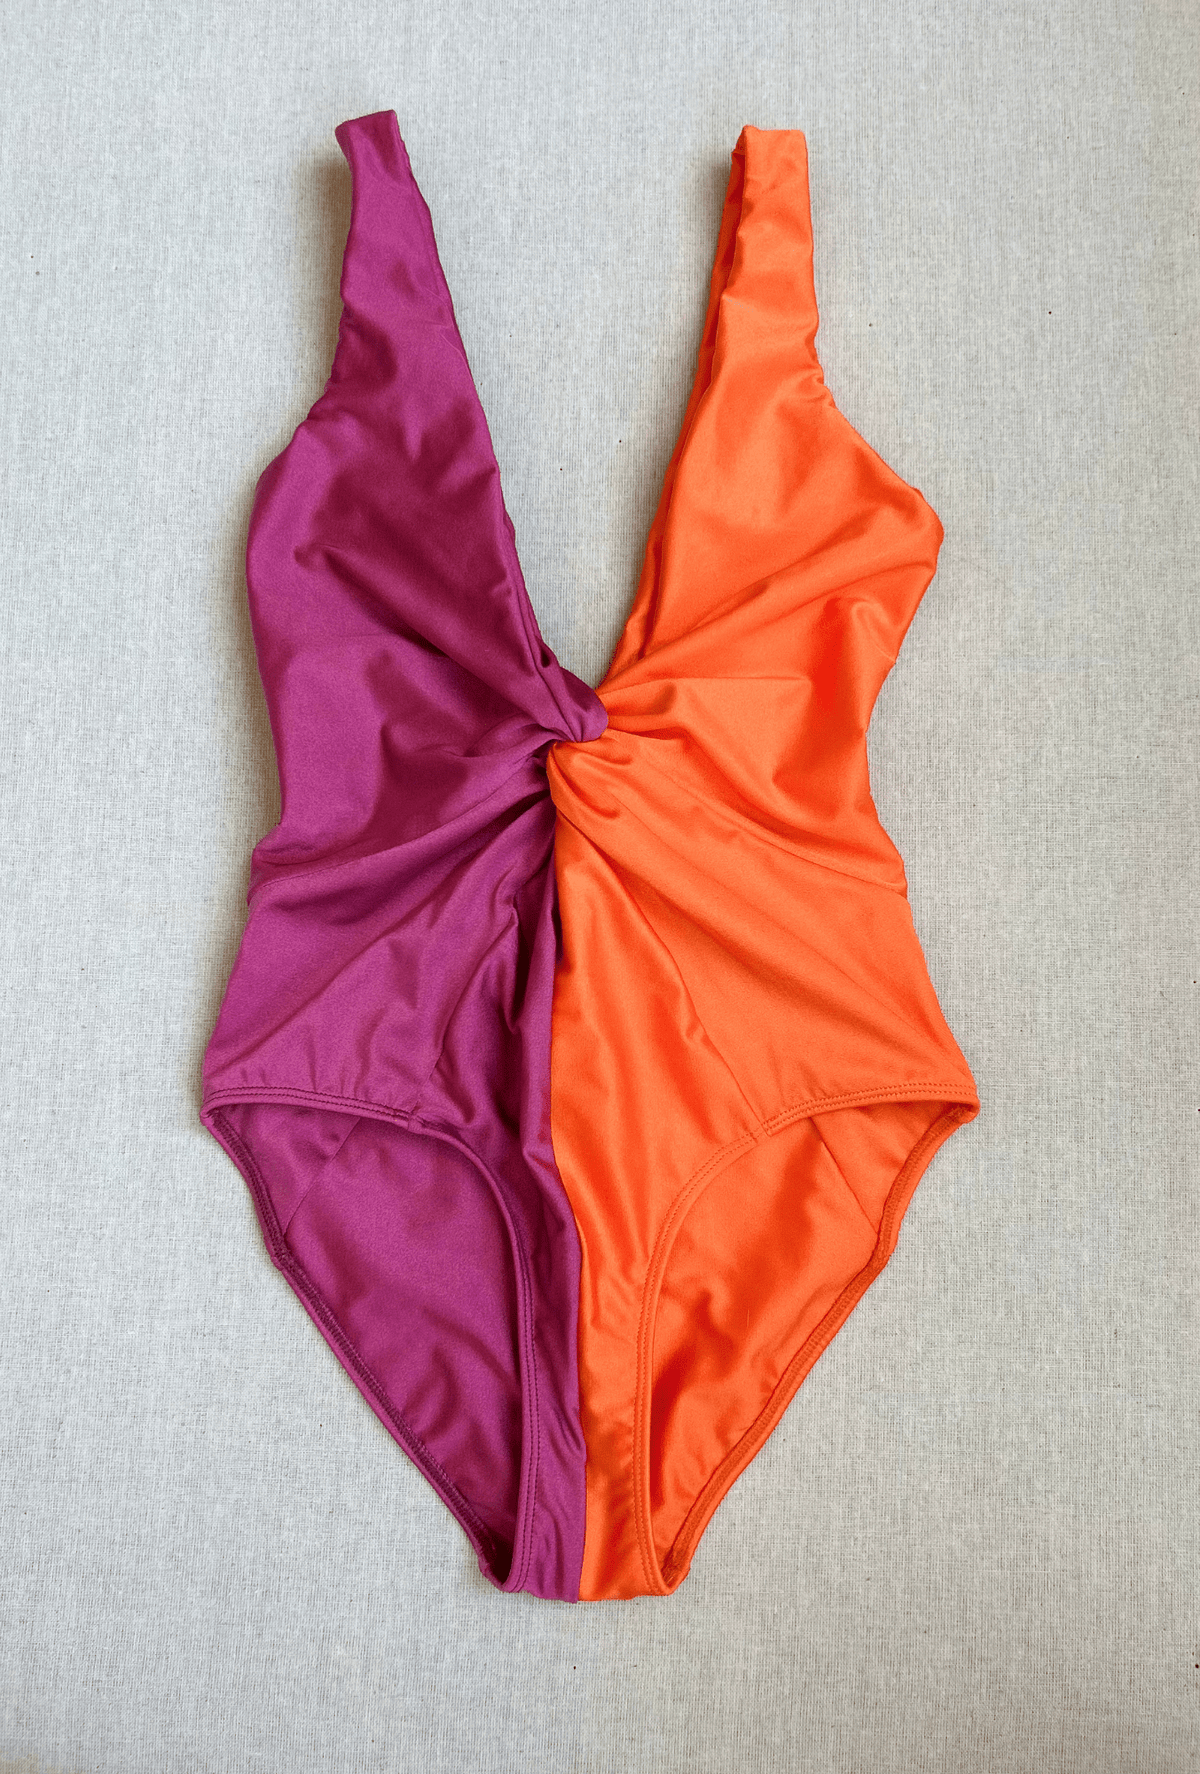 olivia one piece in purple / orange shine - size s